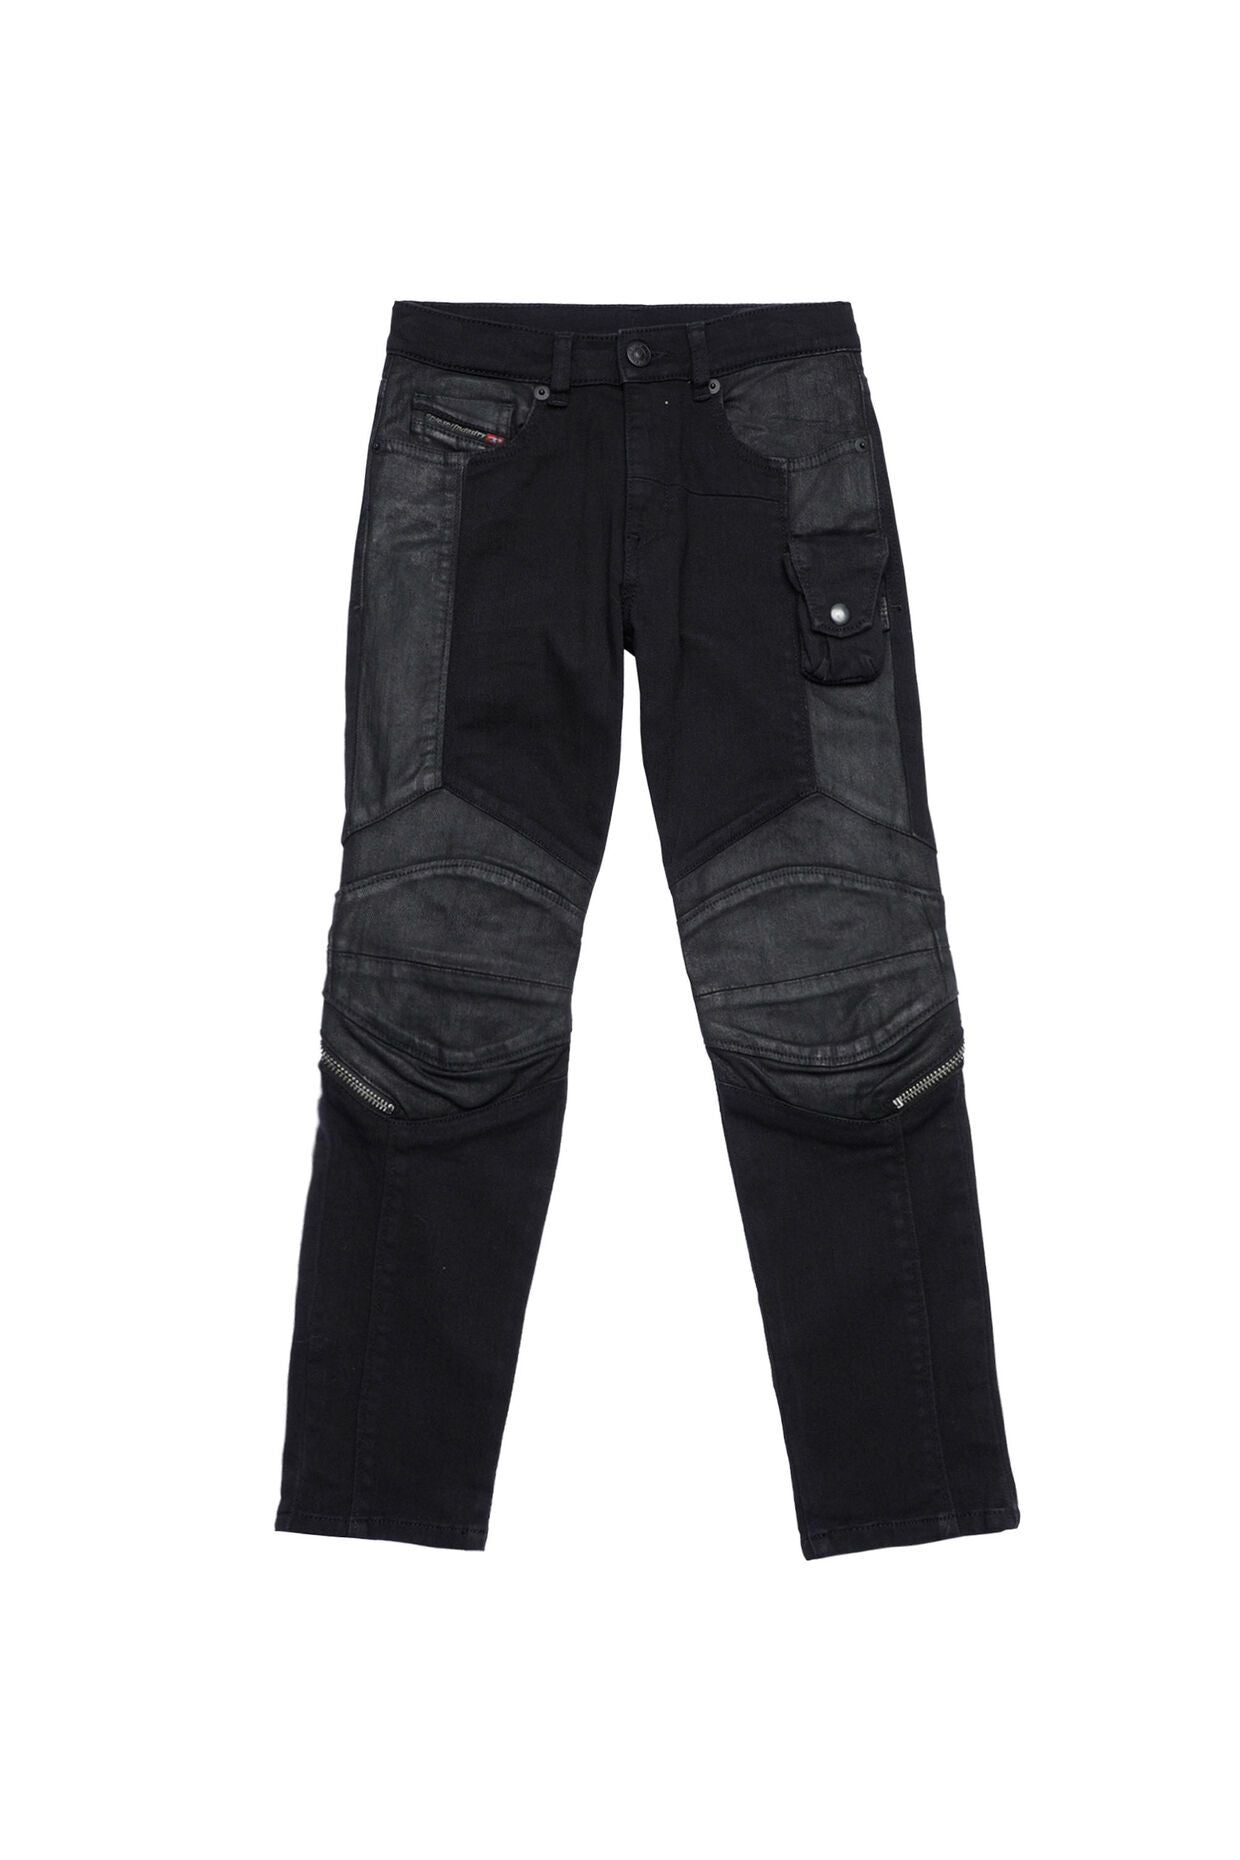 Diesel Boys D-Strukt Black Jeans